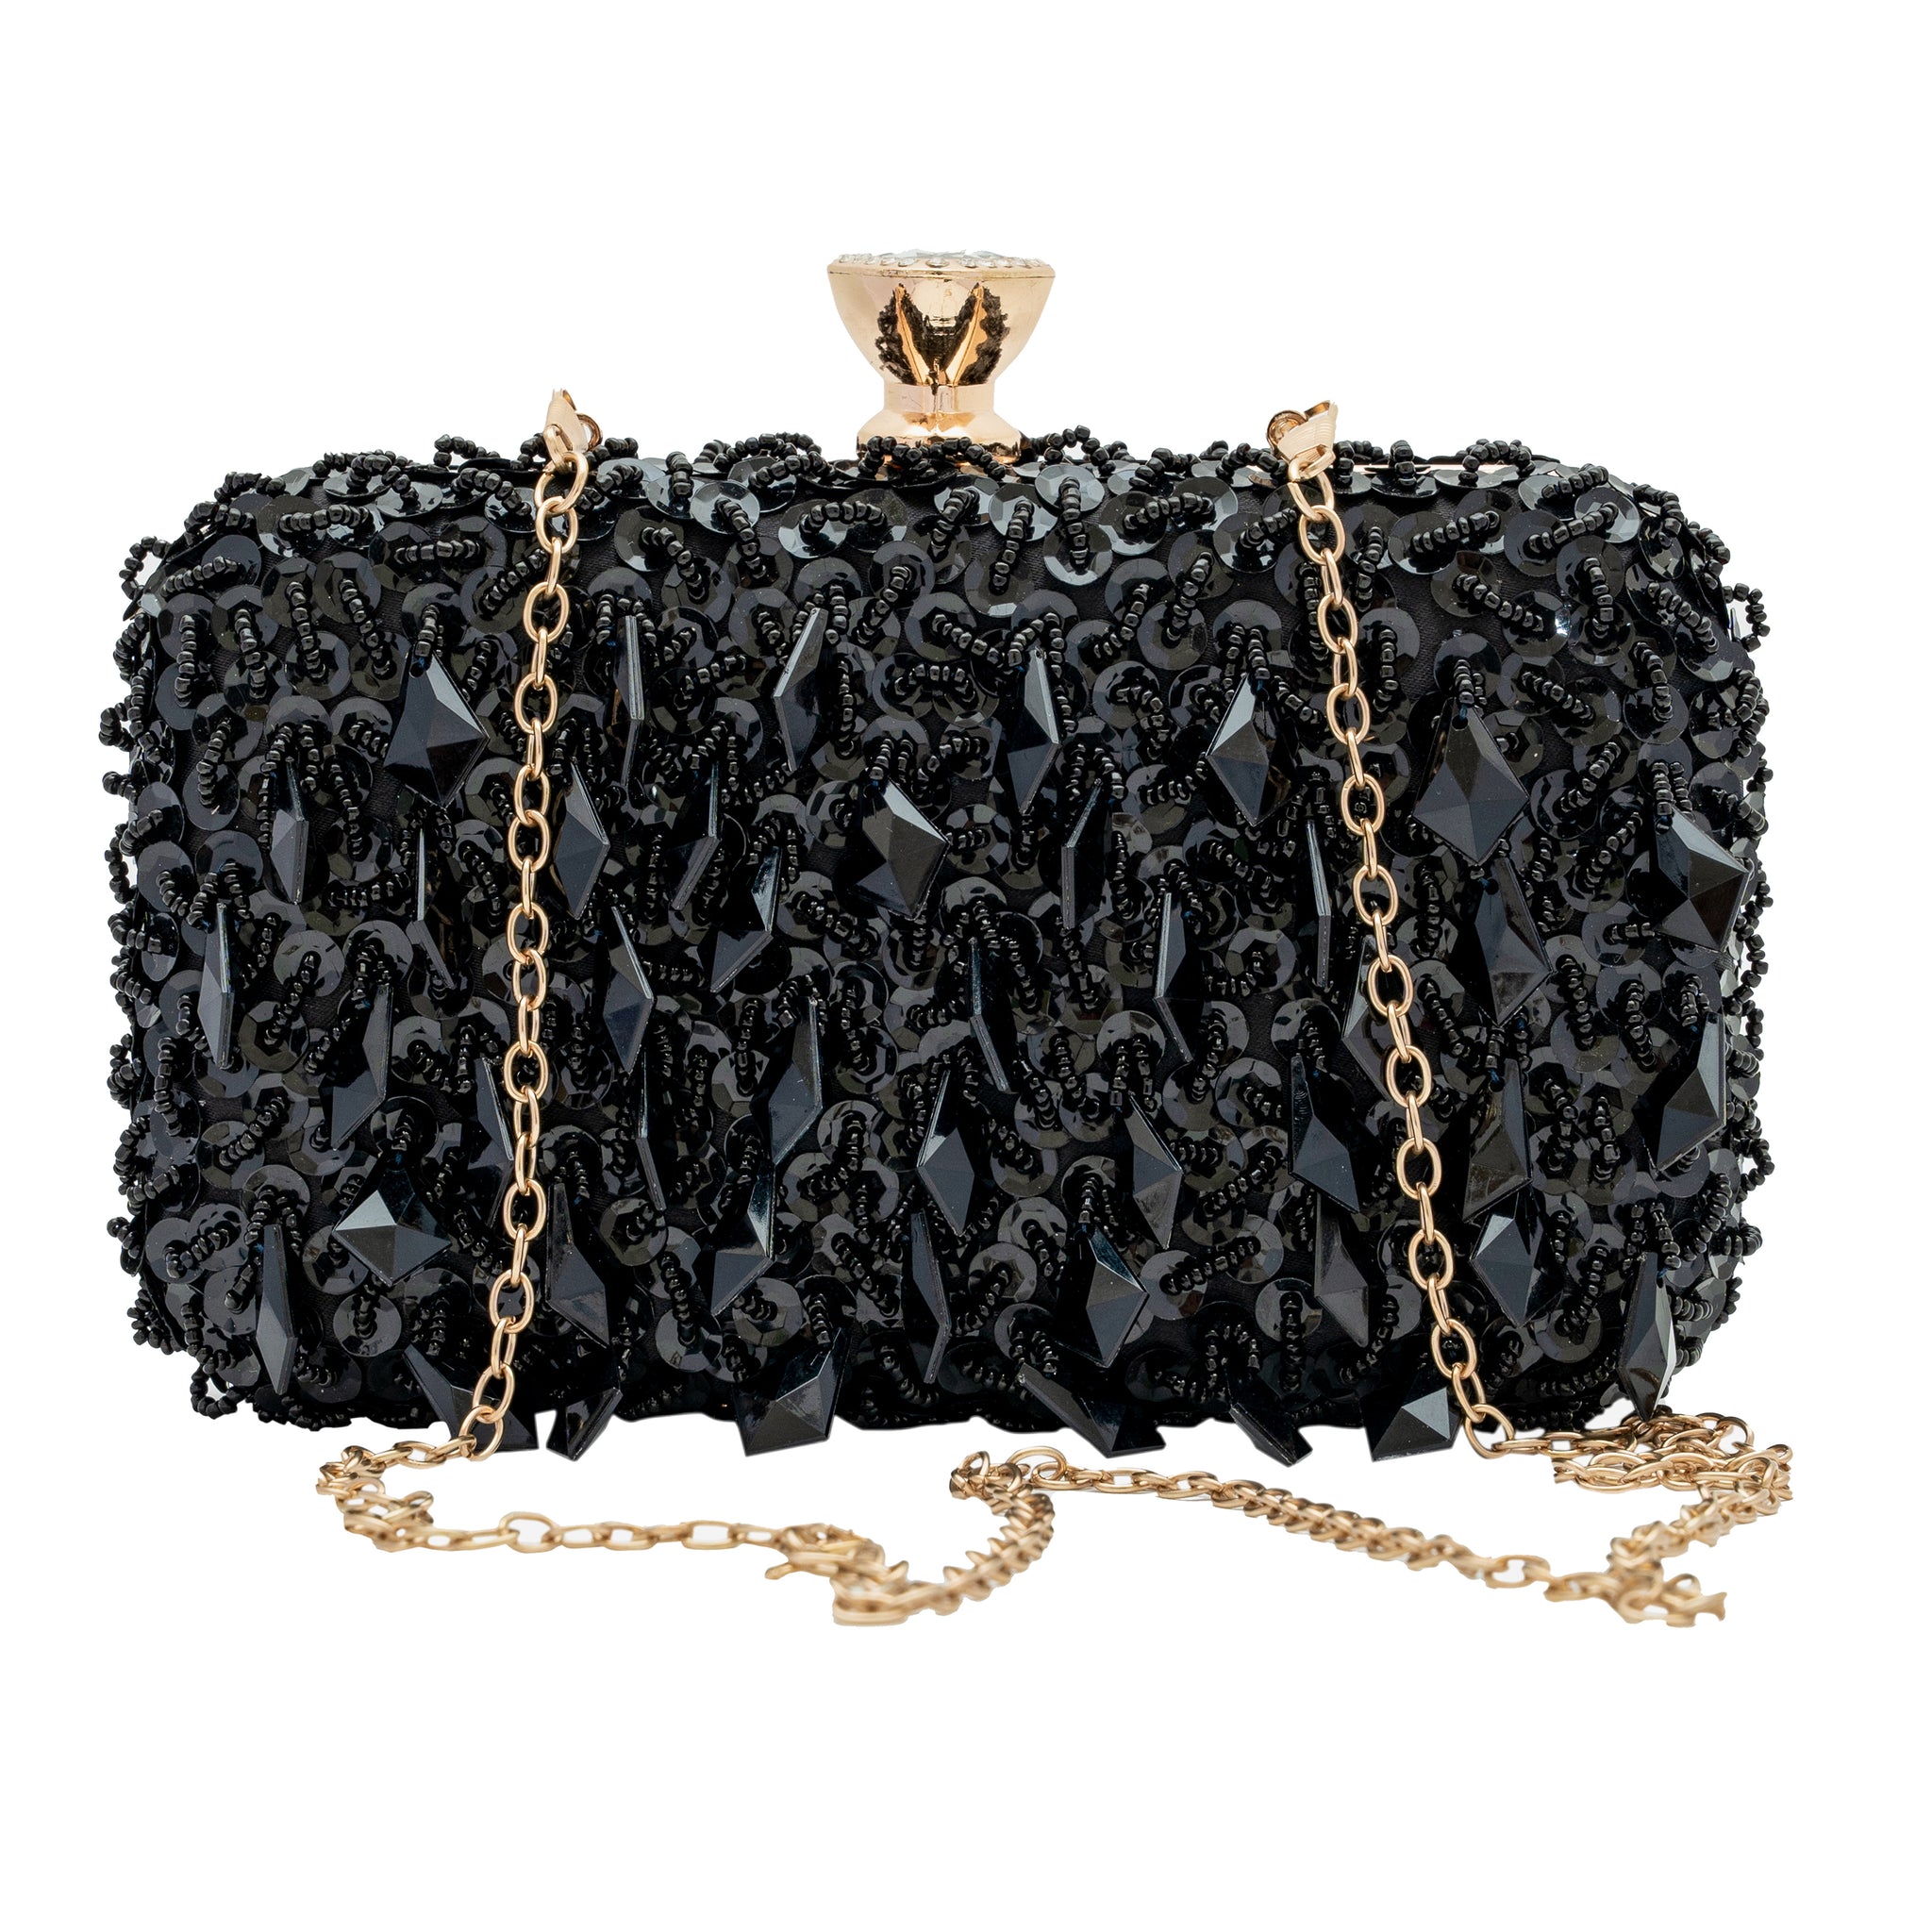 Chokore Embellished Evening Clutch/Handbag (Black)